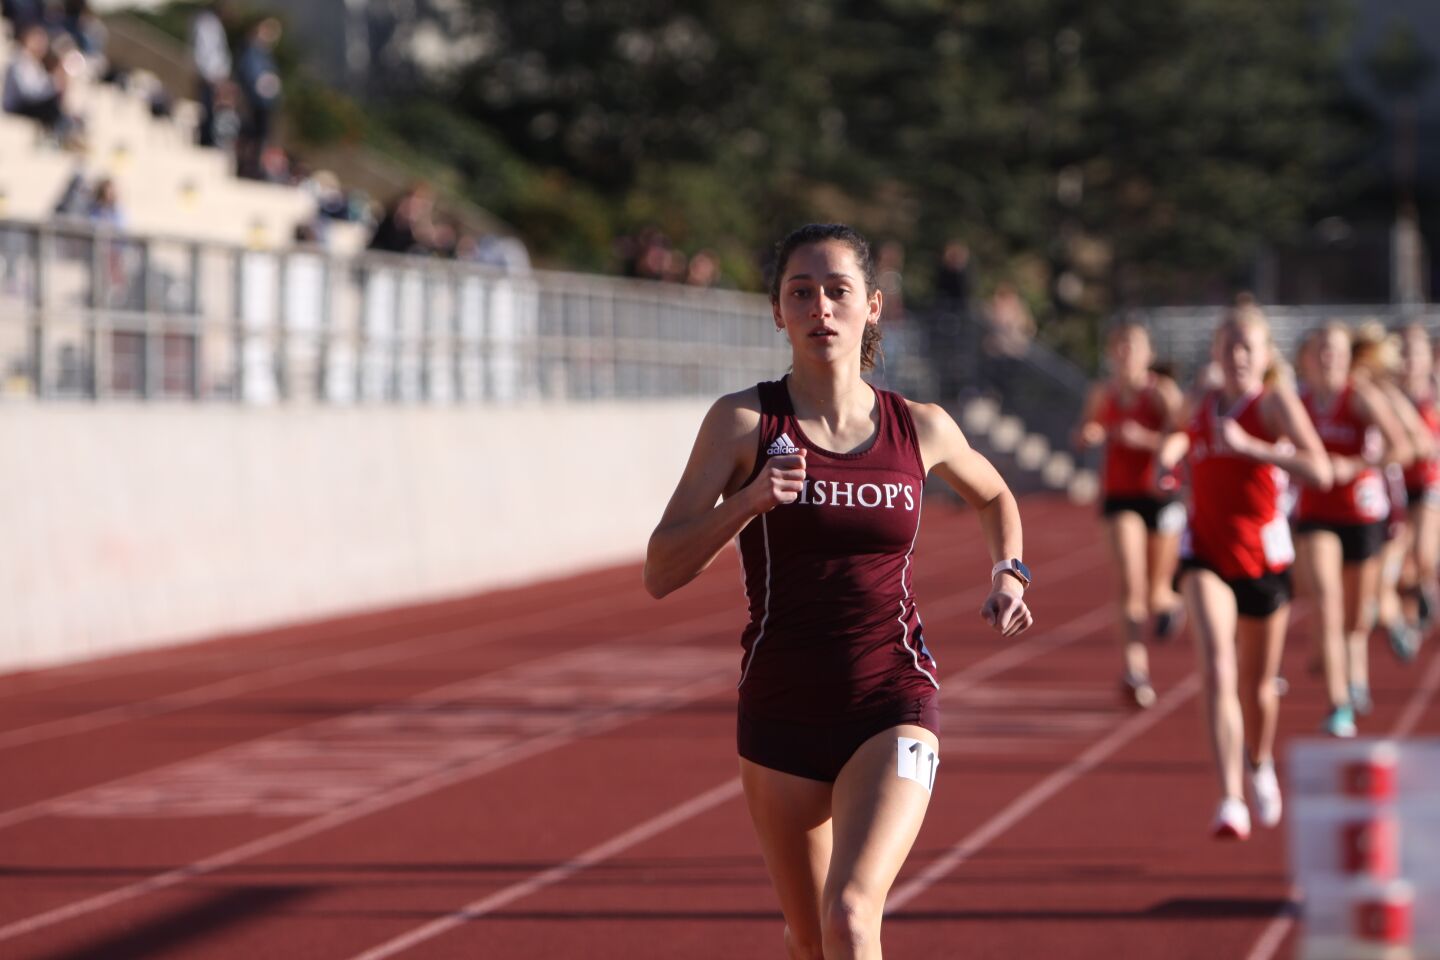 Bishop's School runner Maddie Cramer maintains a big lead in the 1,600-meter race.